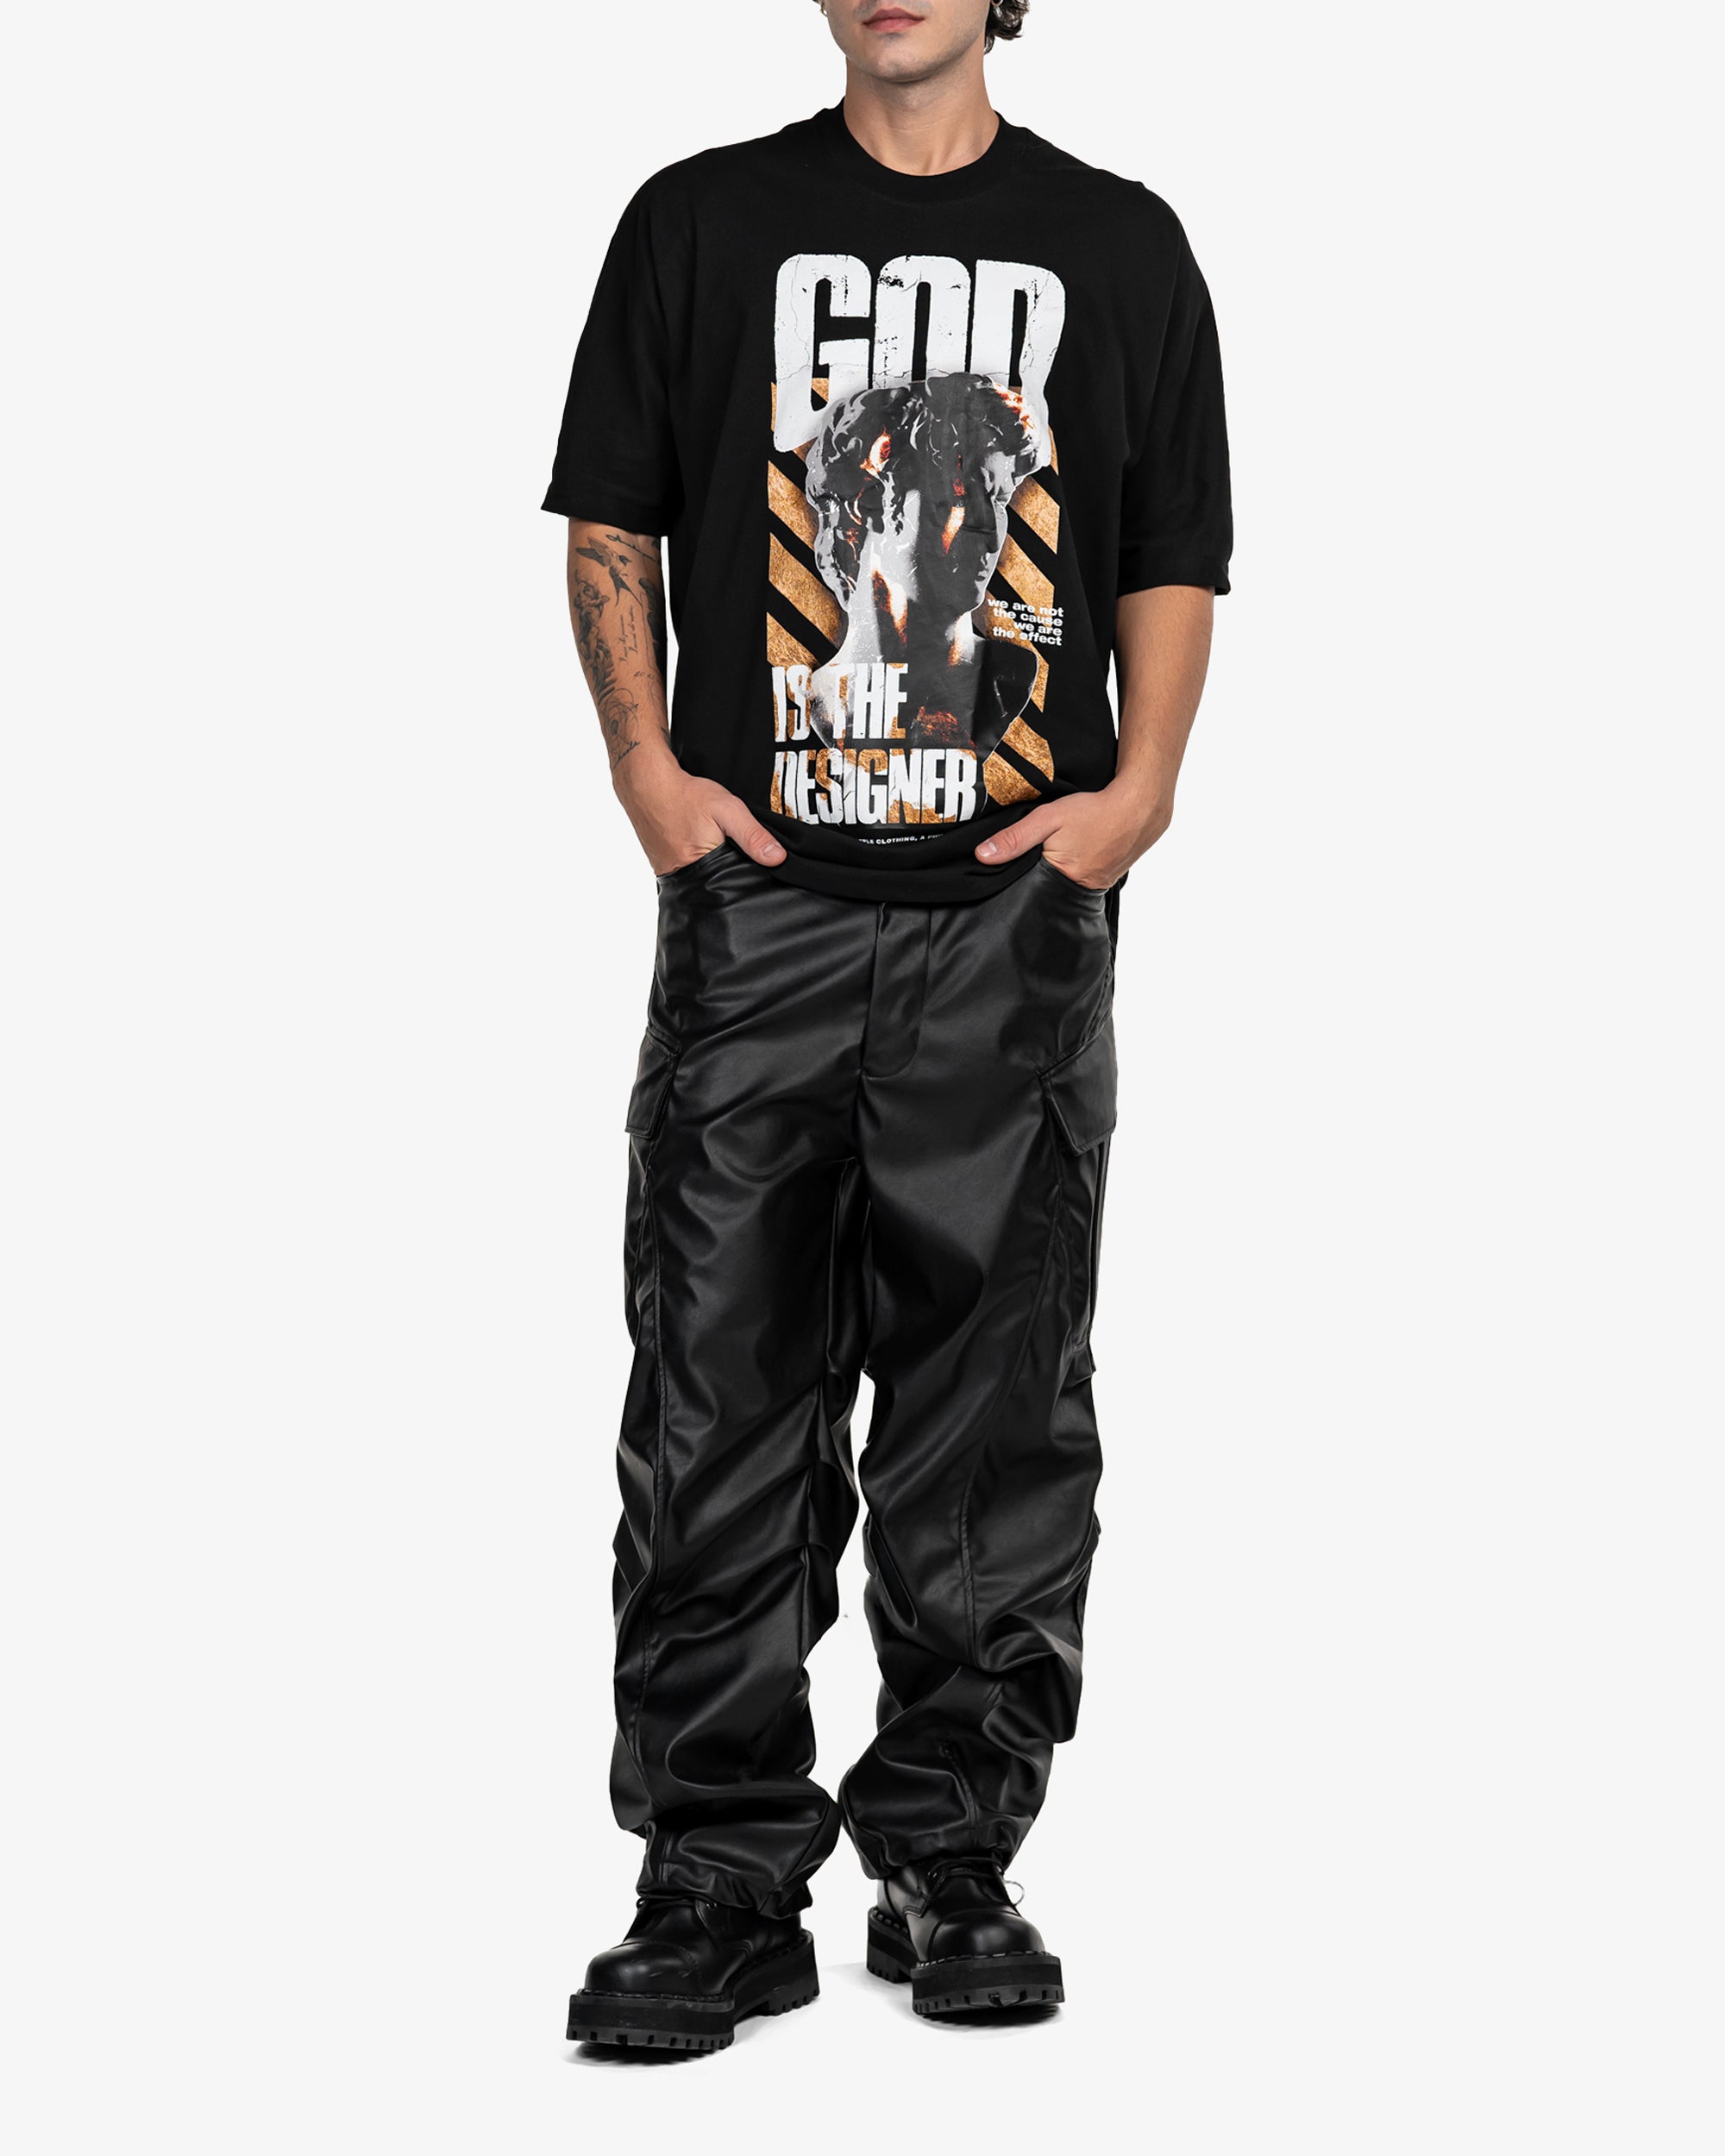 God is the designer t-shirt - T14944